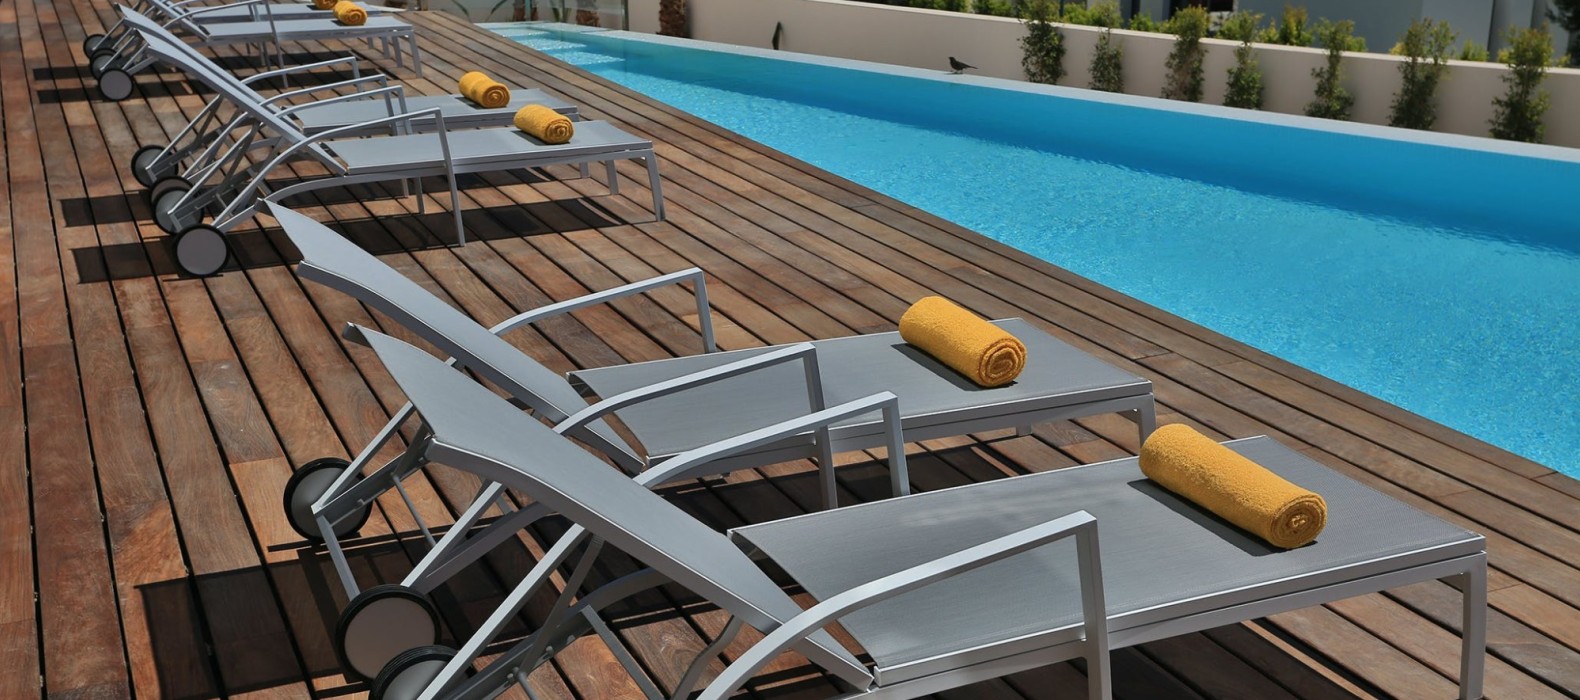 Sun lounger at the pool of Villa Amaya in Ibiza